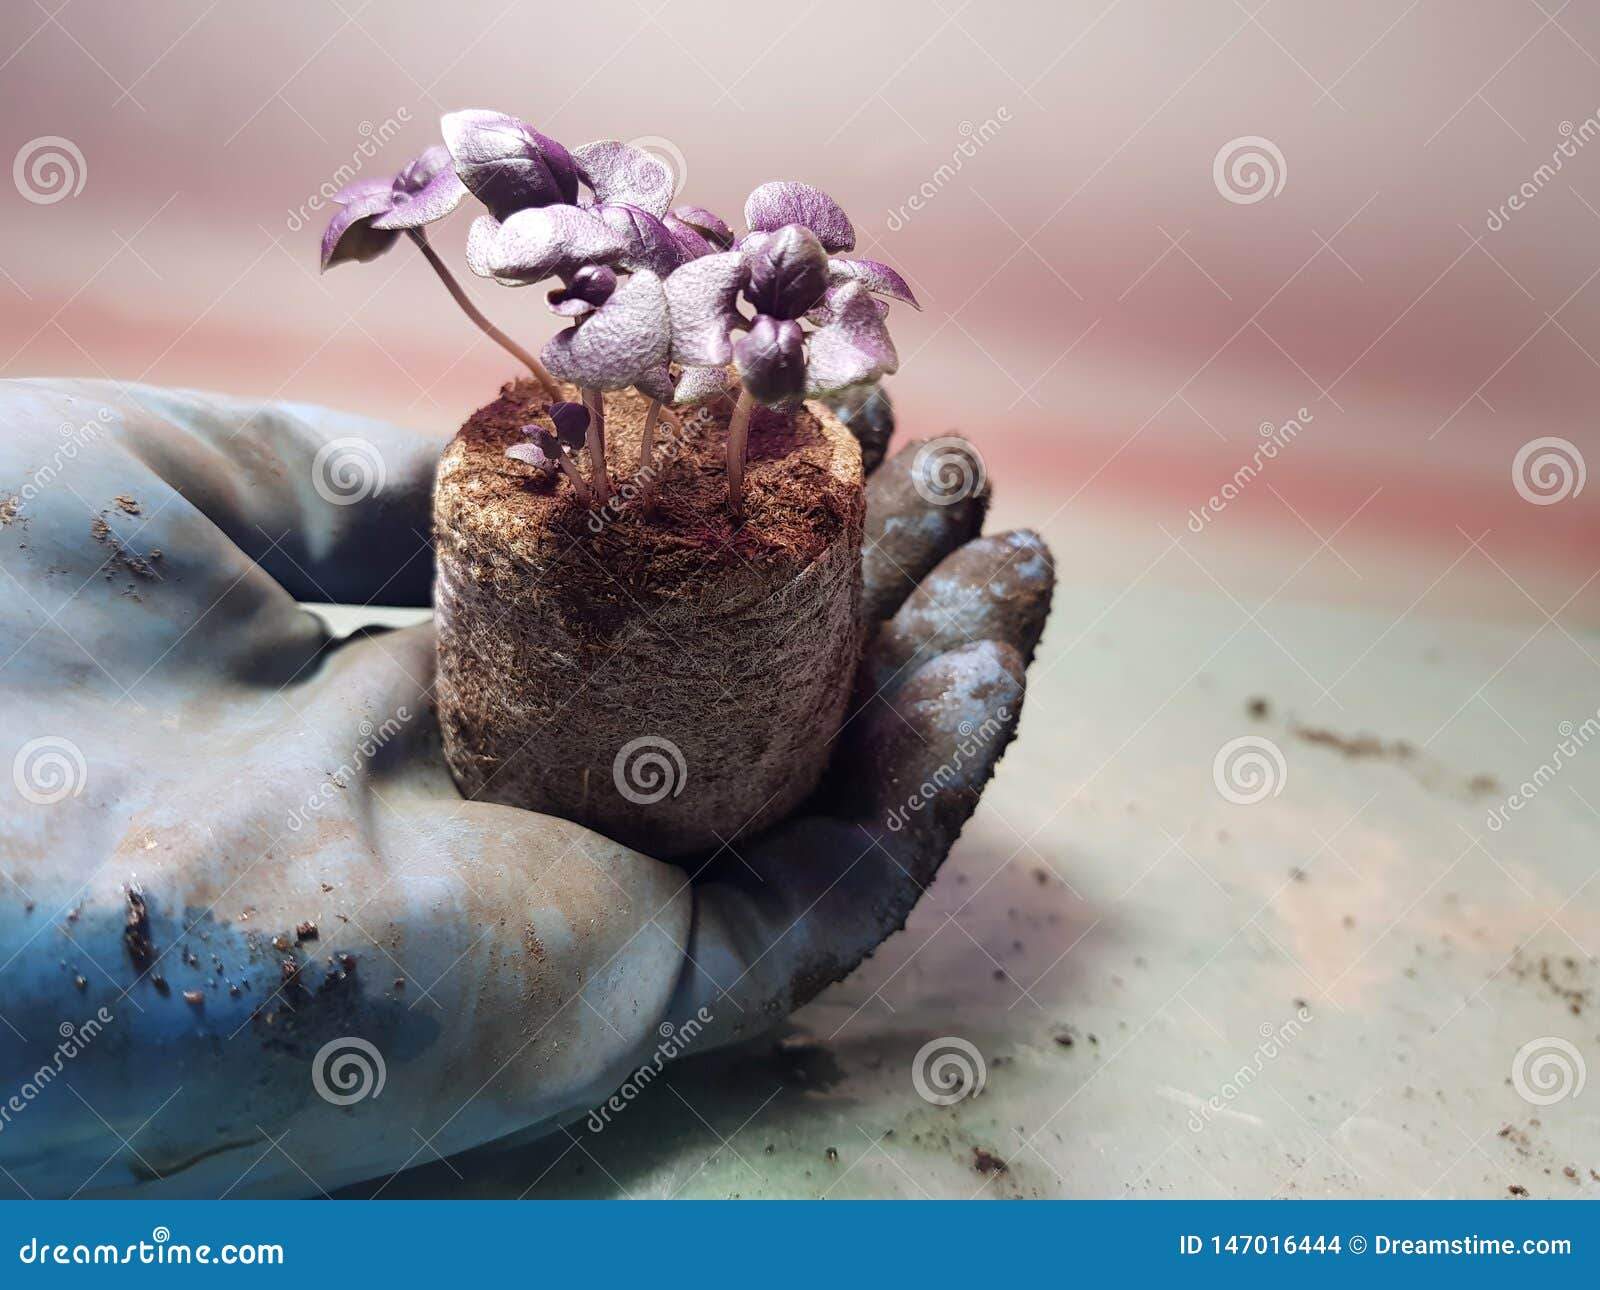 seedlings - very beautiful basil seedlings in a pot in a gloved hand